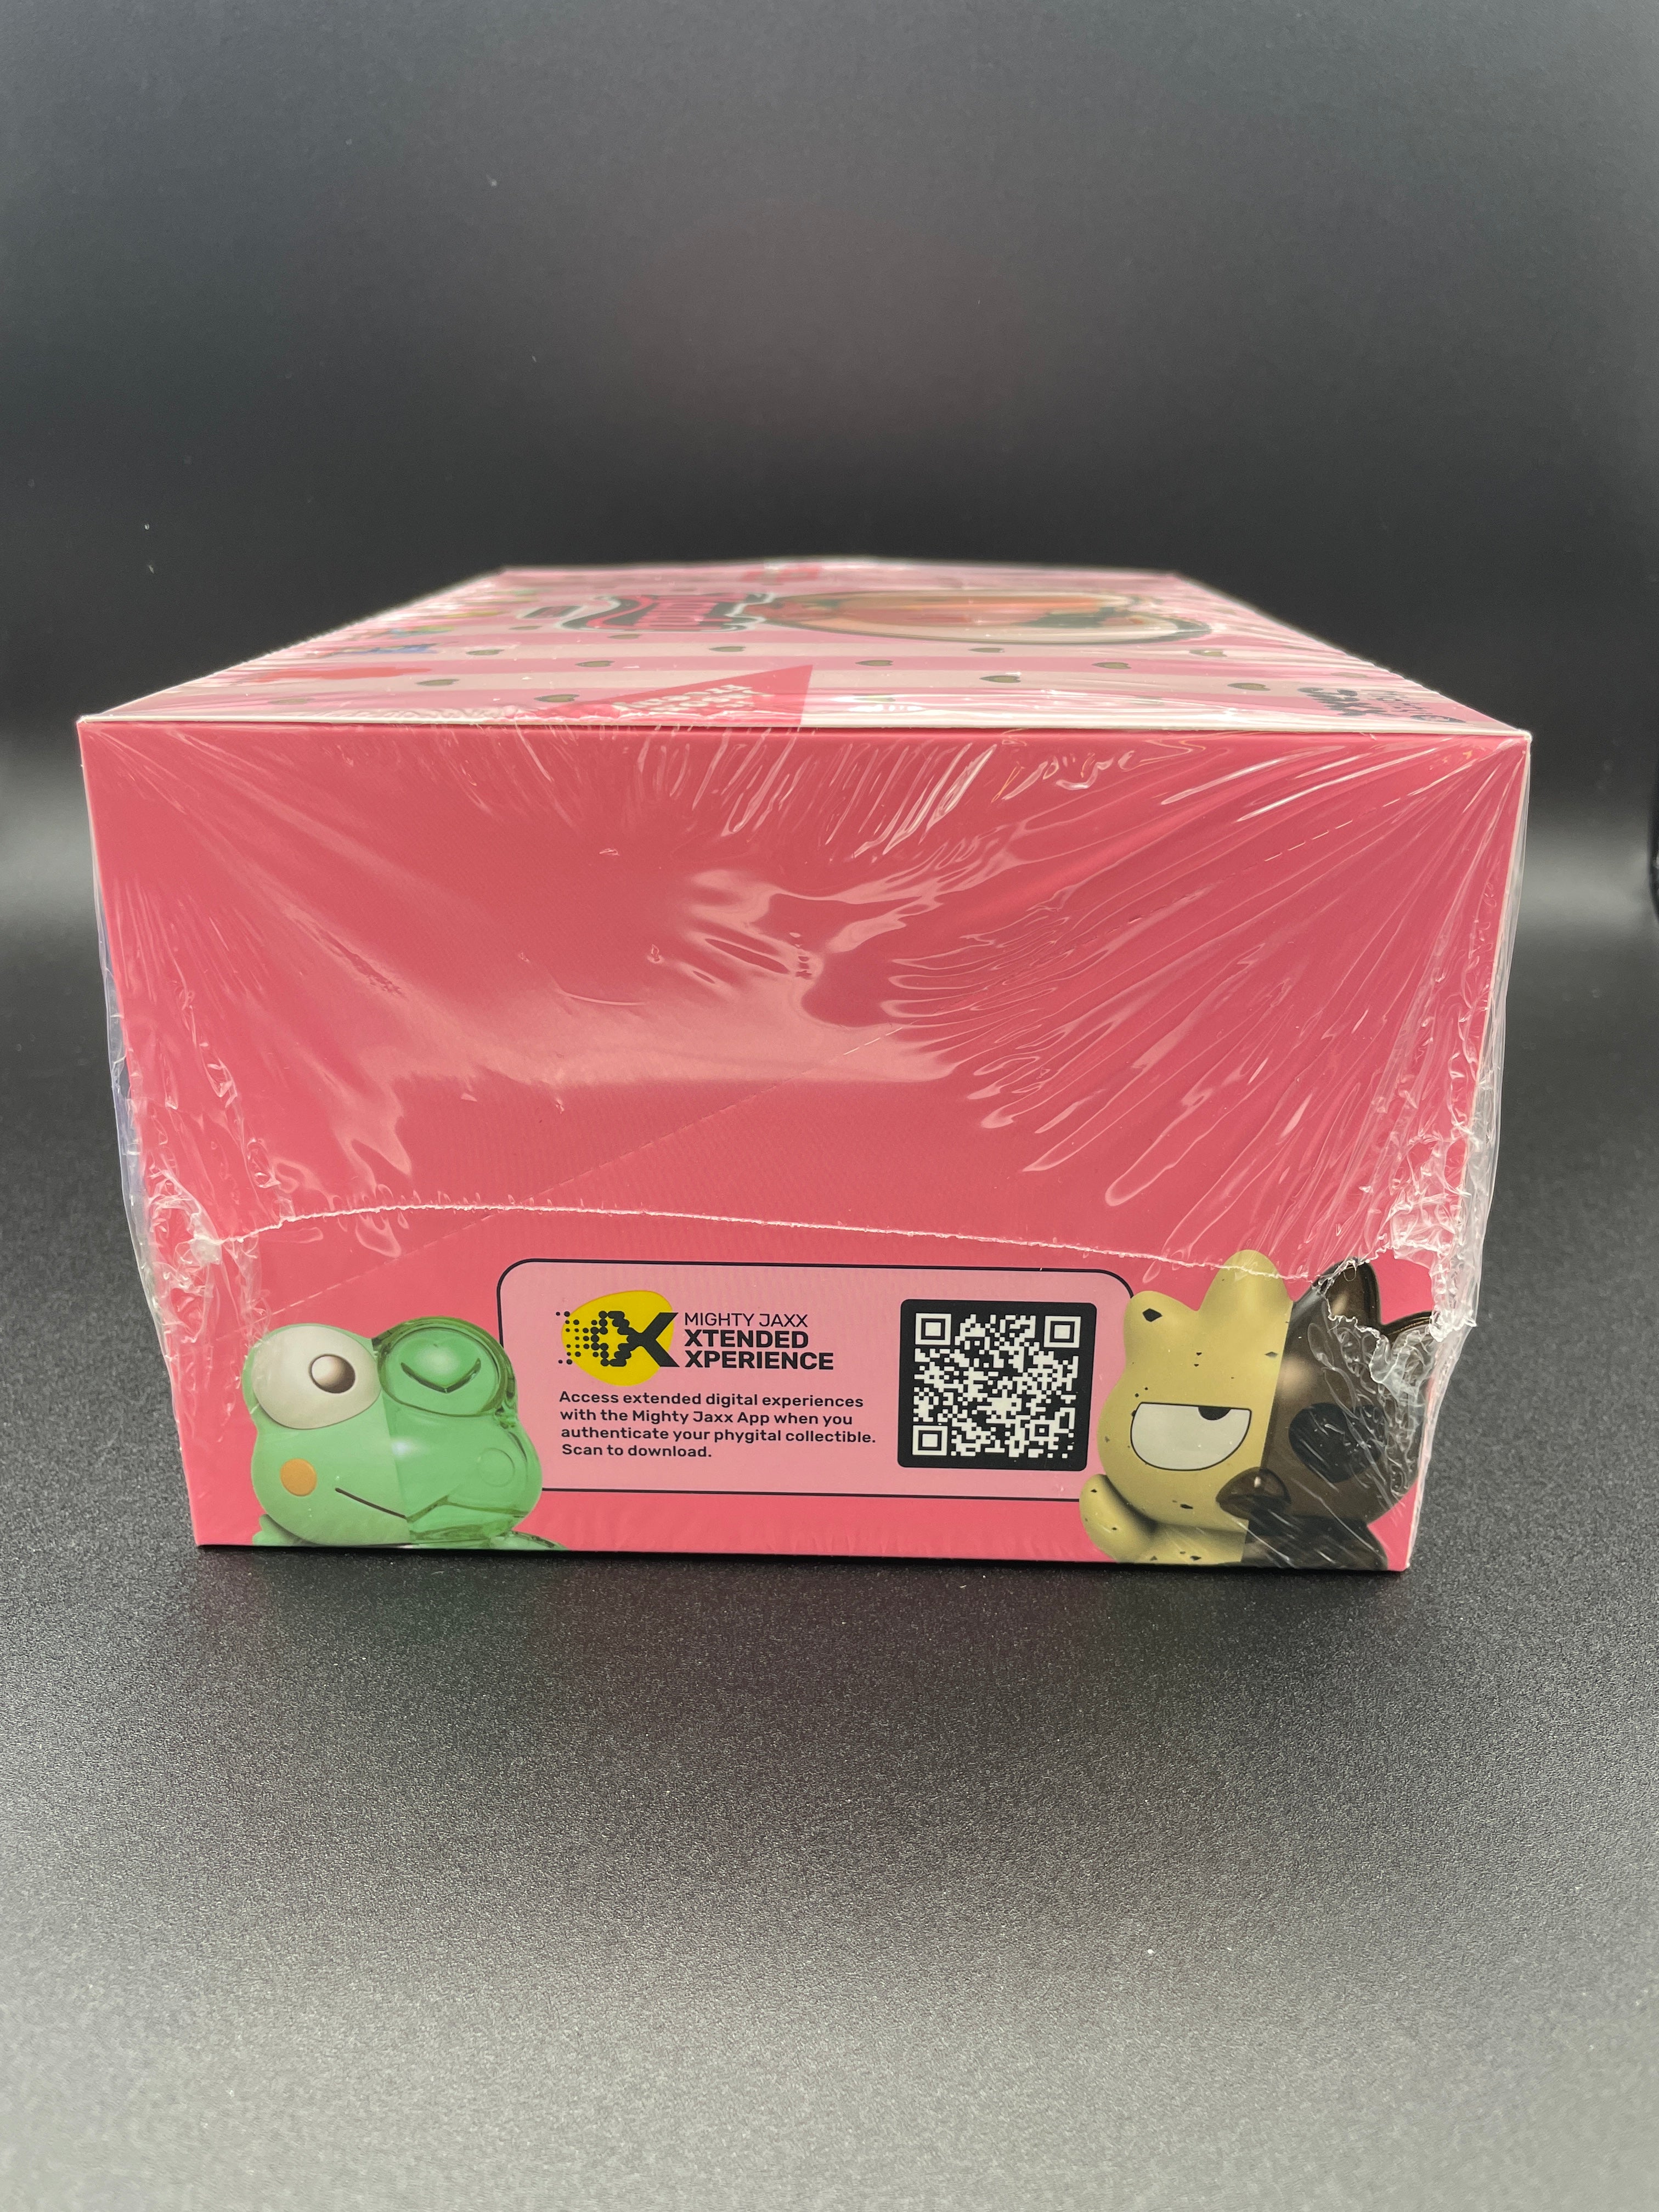 Mighty Jaxx Sanrio Box Of Kandy Choco Jason Freeny Series 2 Unopened Imported